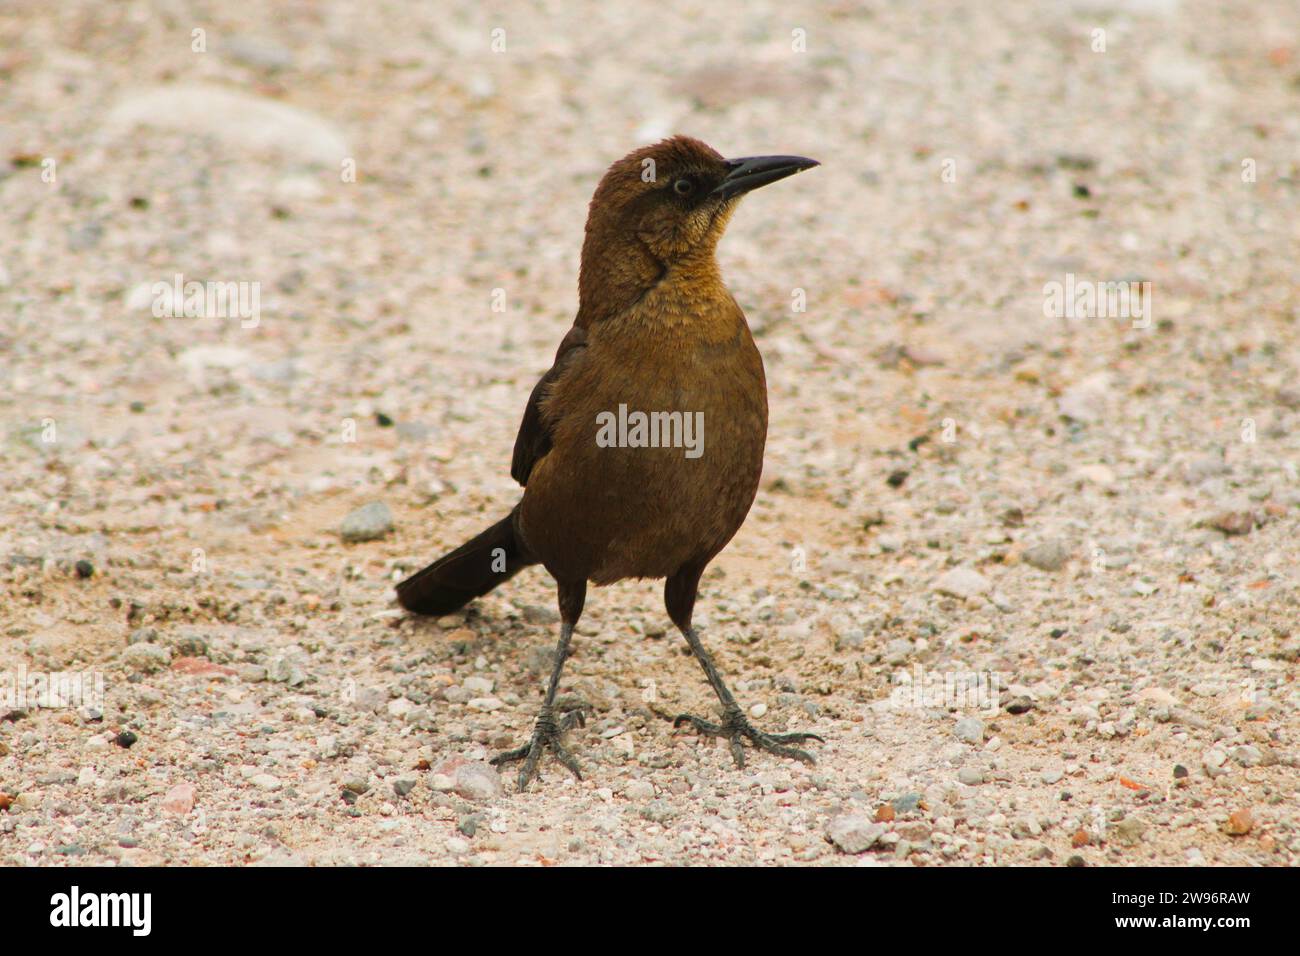 Schwarze Vögel in der Natur - Colorado River Vögel - männliche und weibliche schwarze Vögel Stockfoto